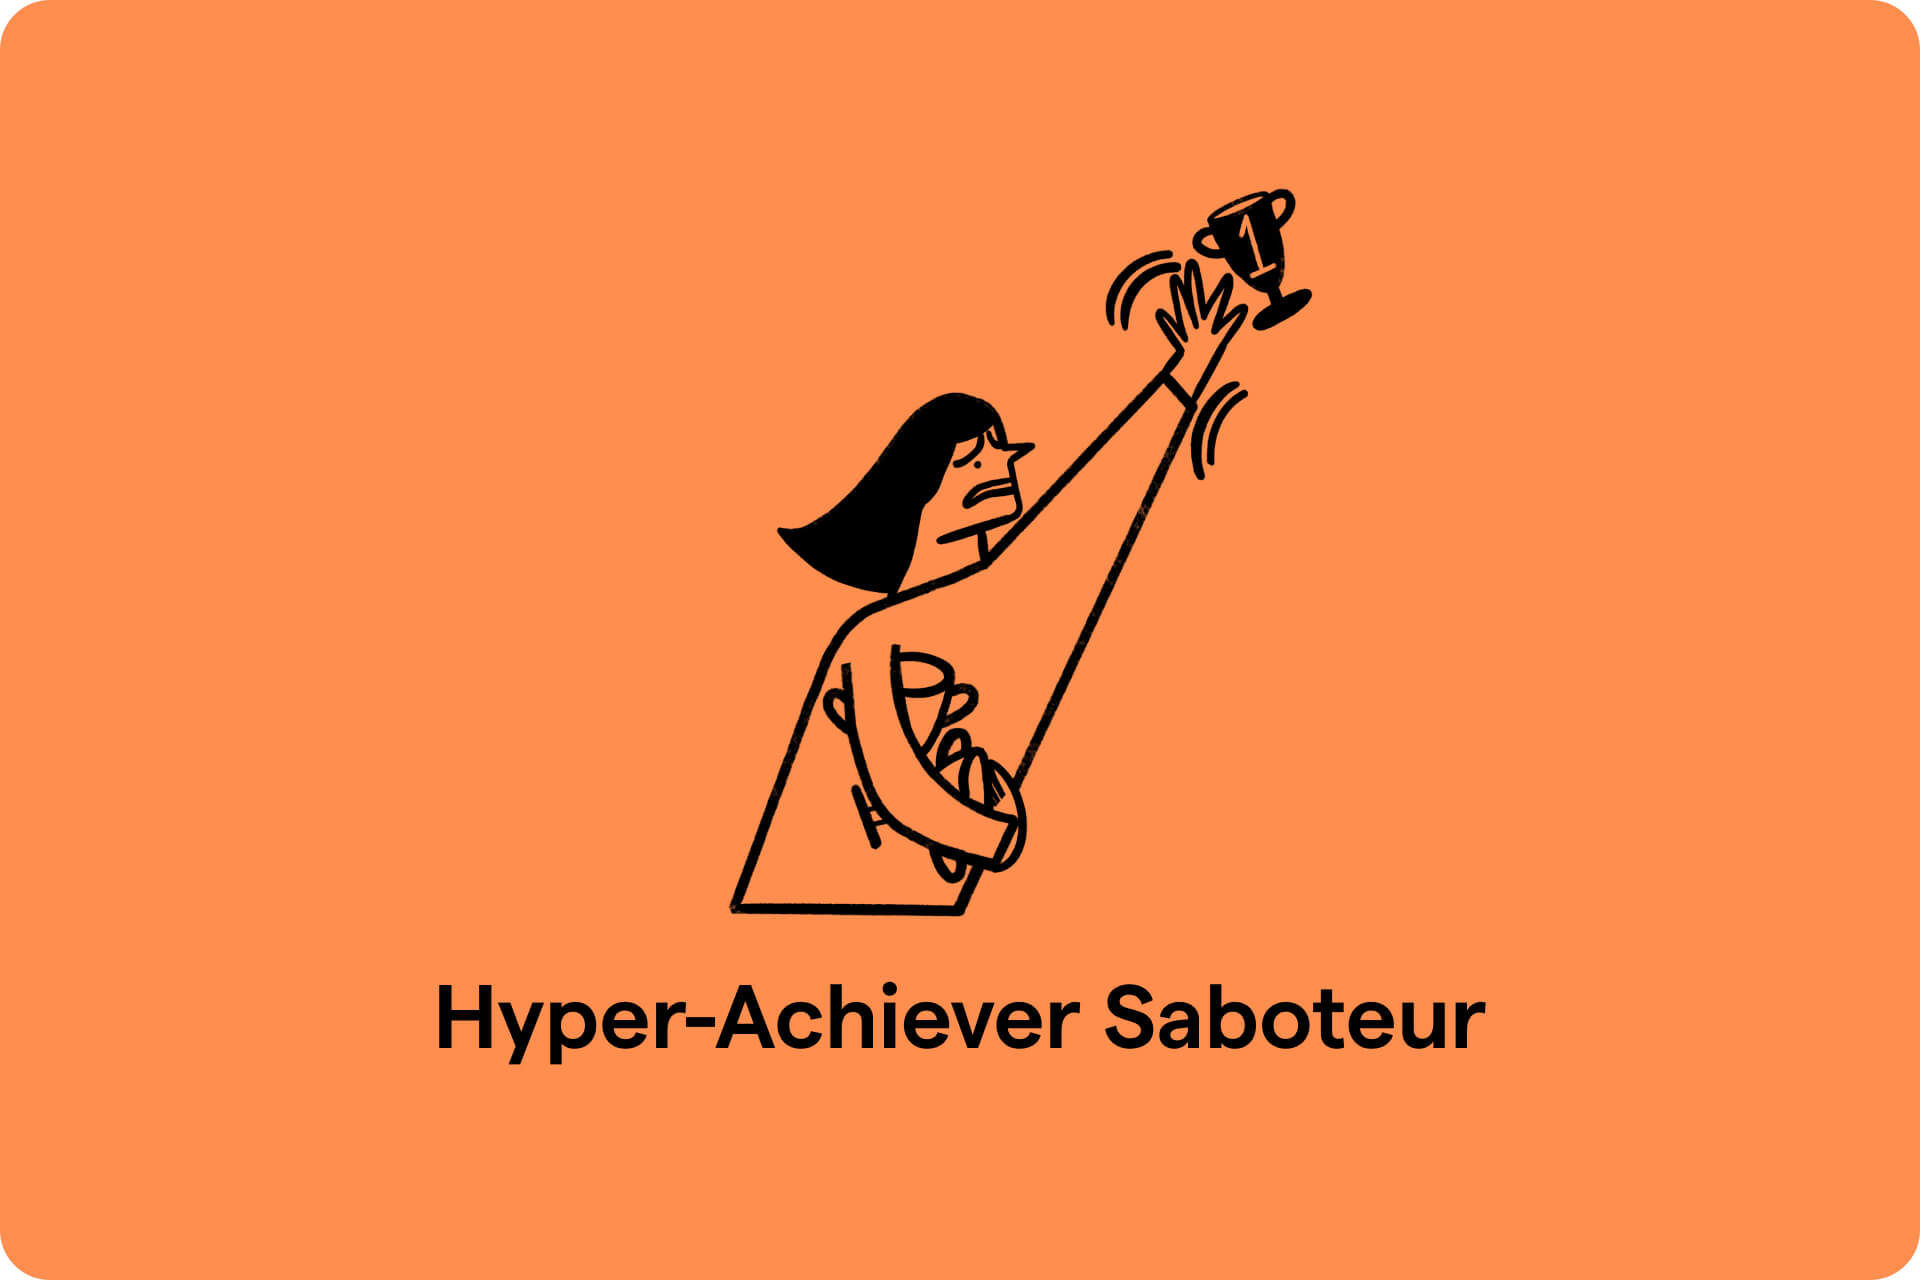 hyper-achiever saboteur illustration